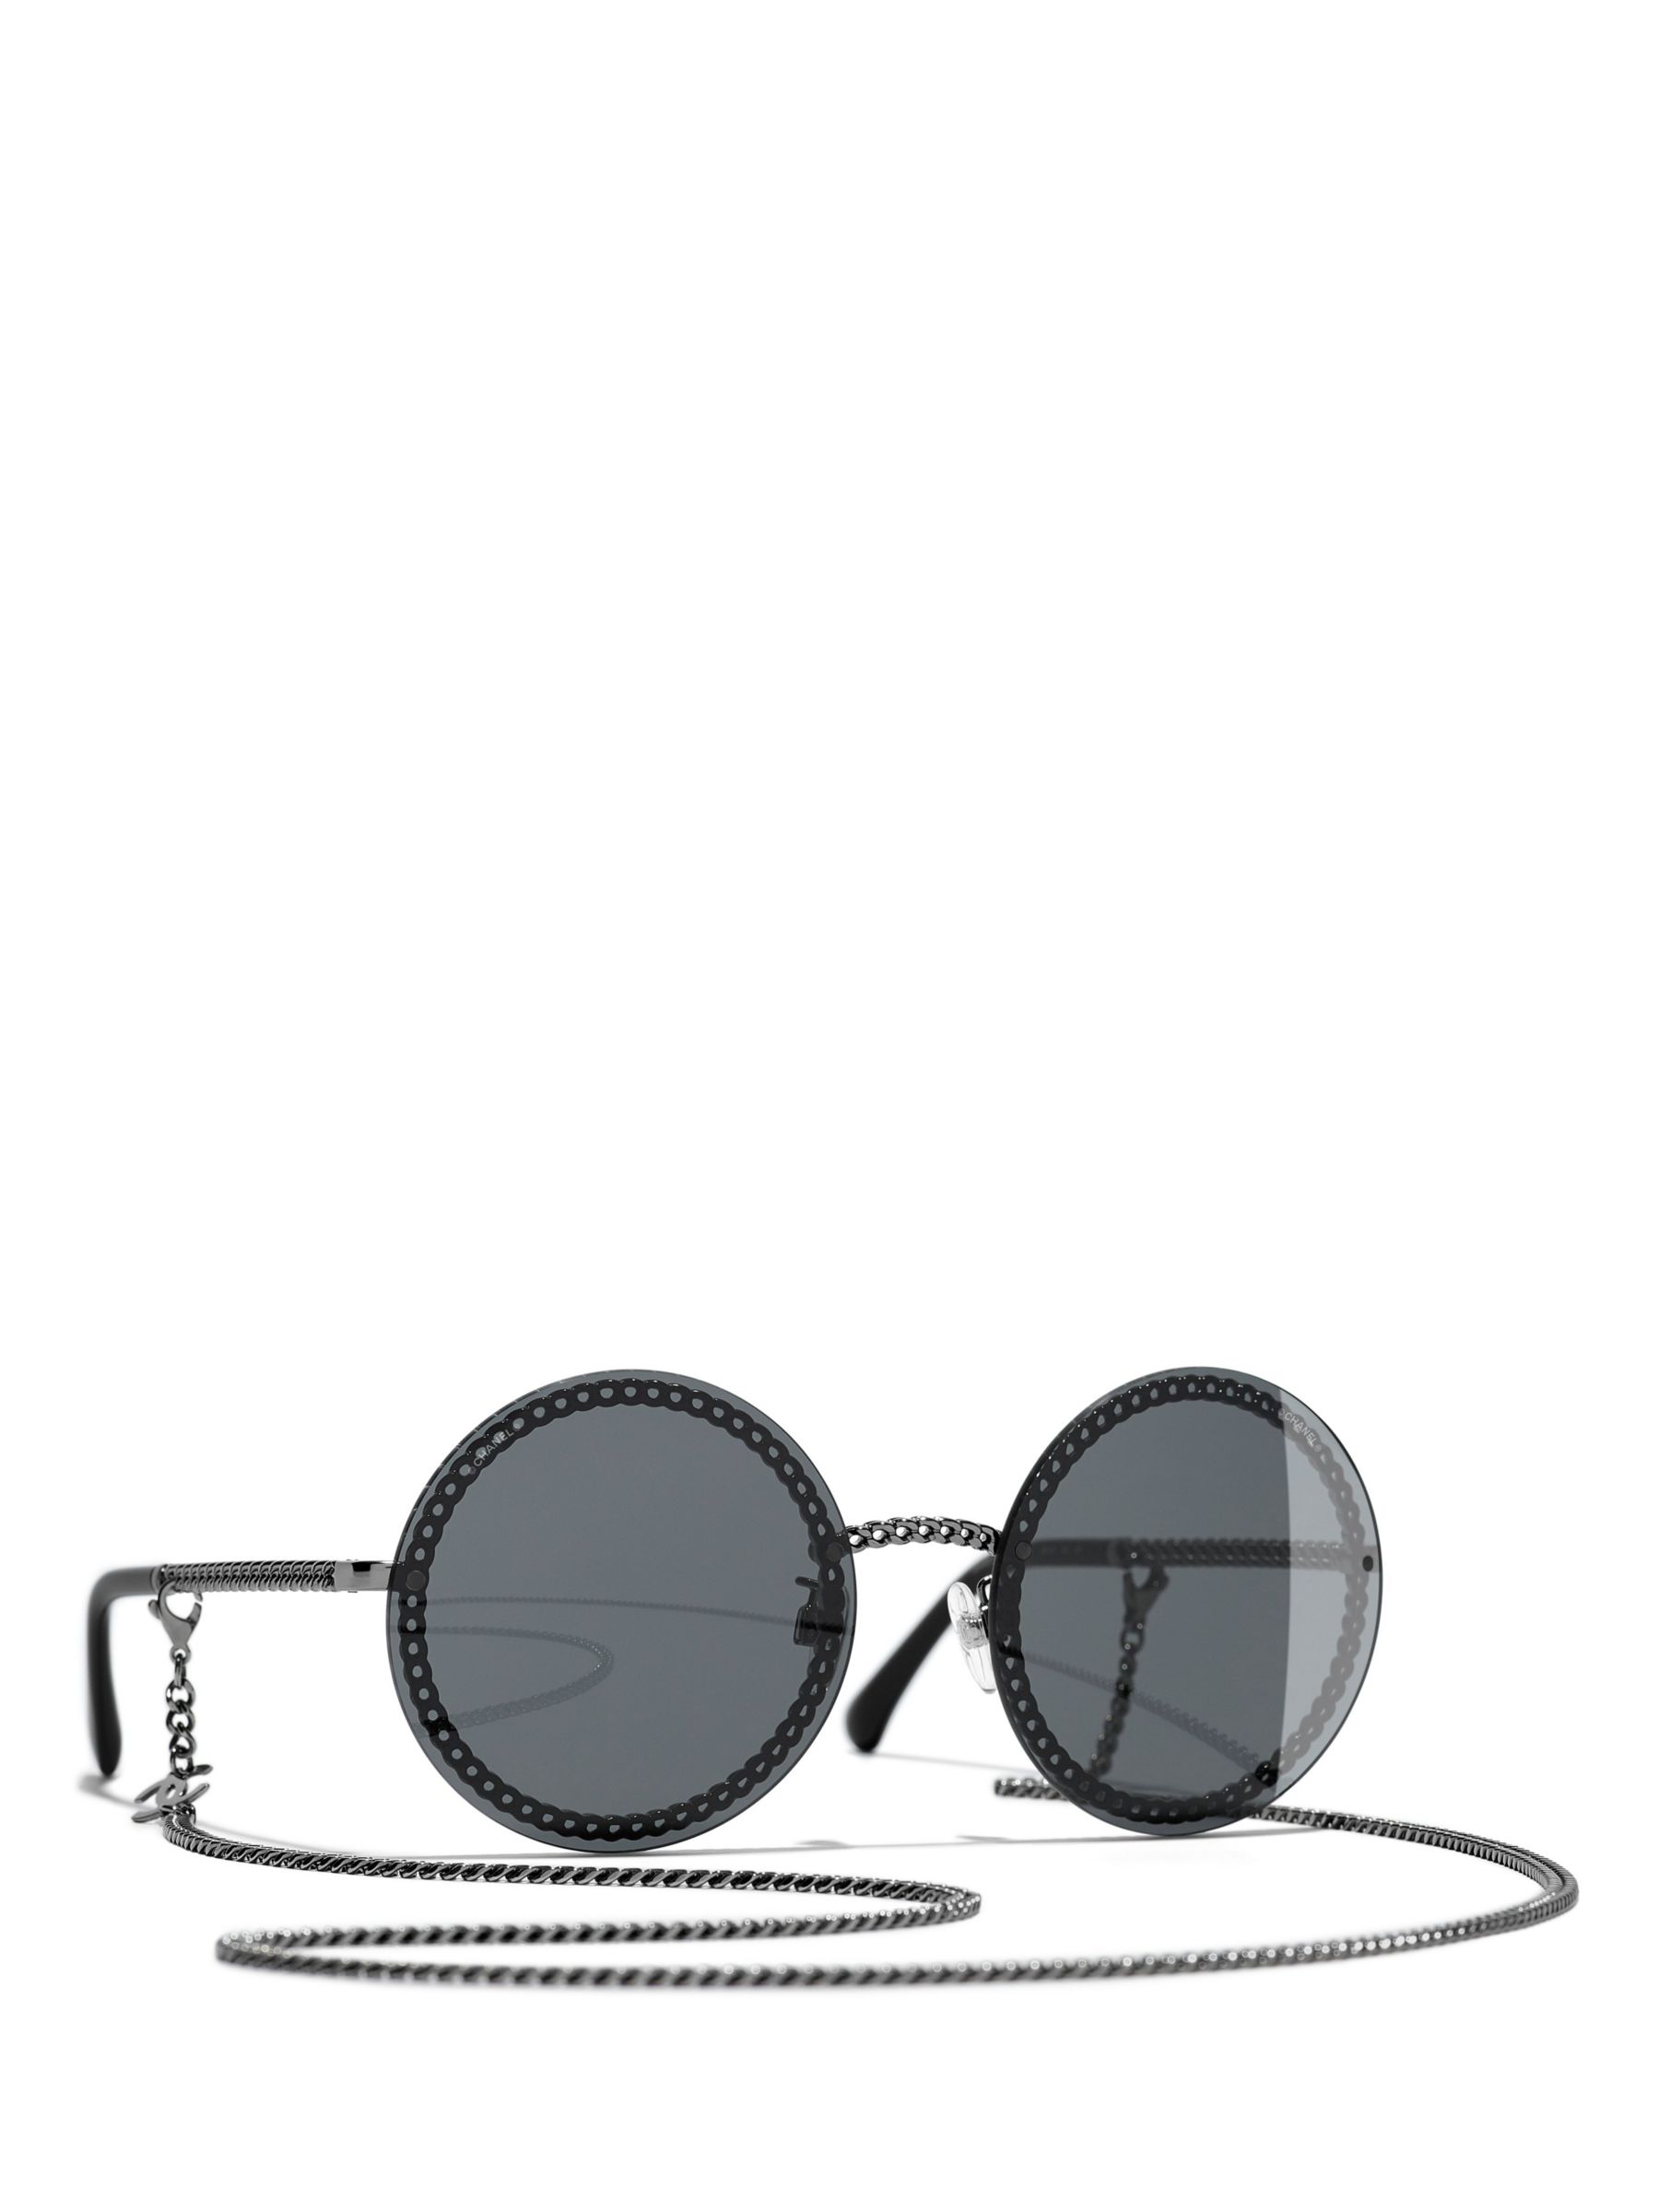 CHANEL Round Sunglasses CH4245 Gunmetal/Grey at John Lewis & Partners